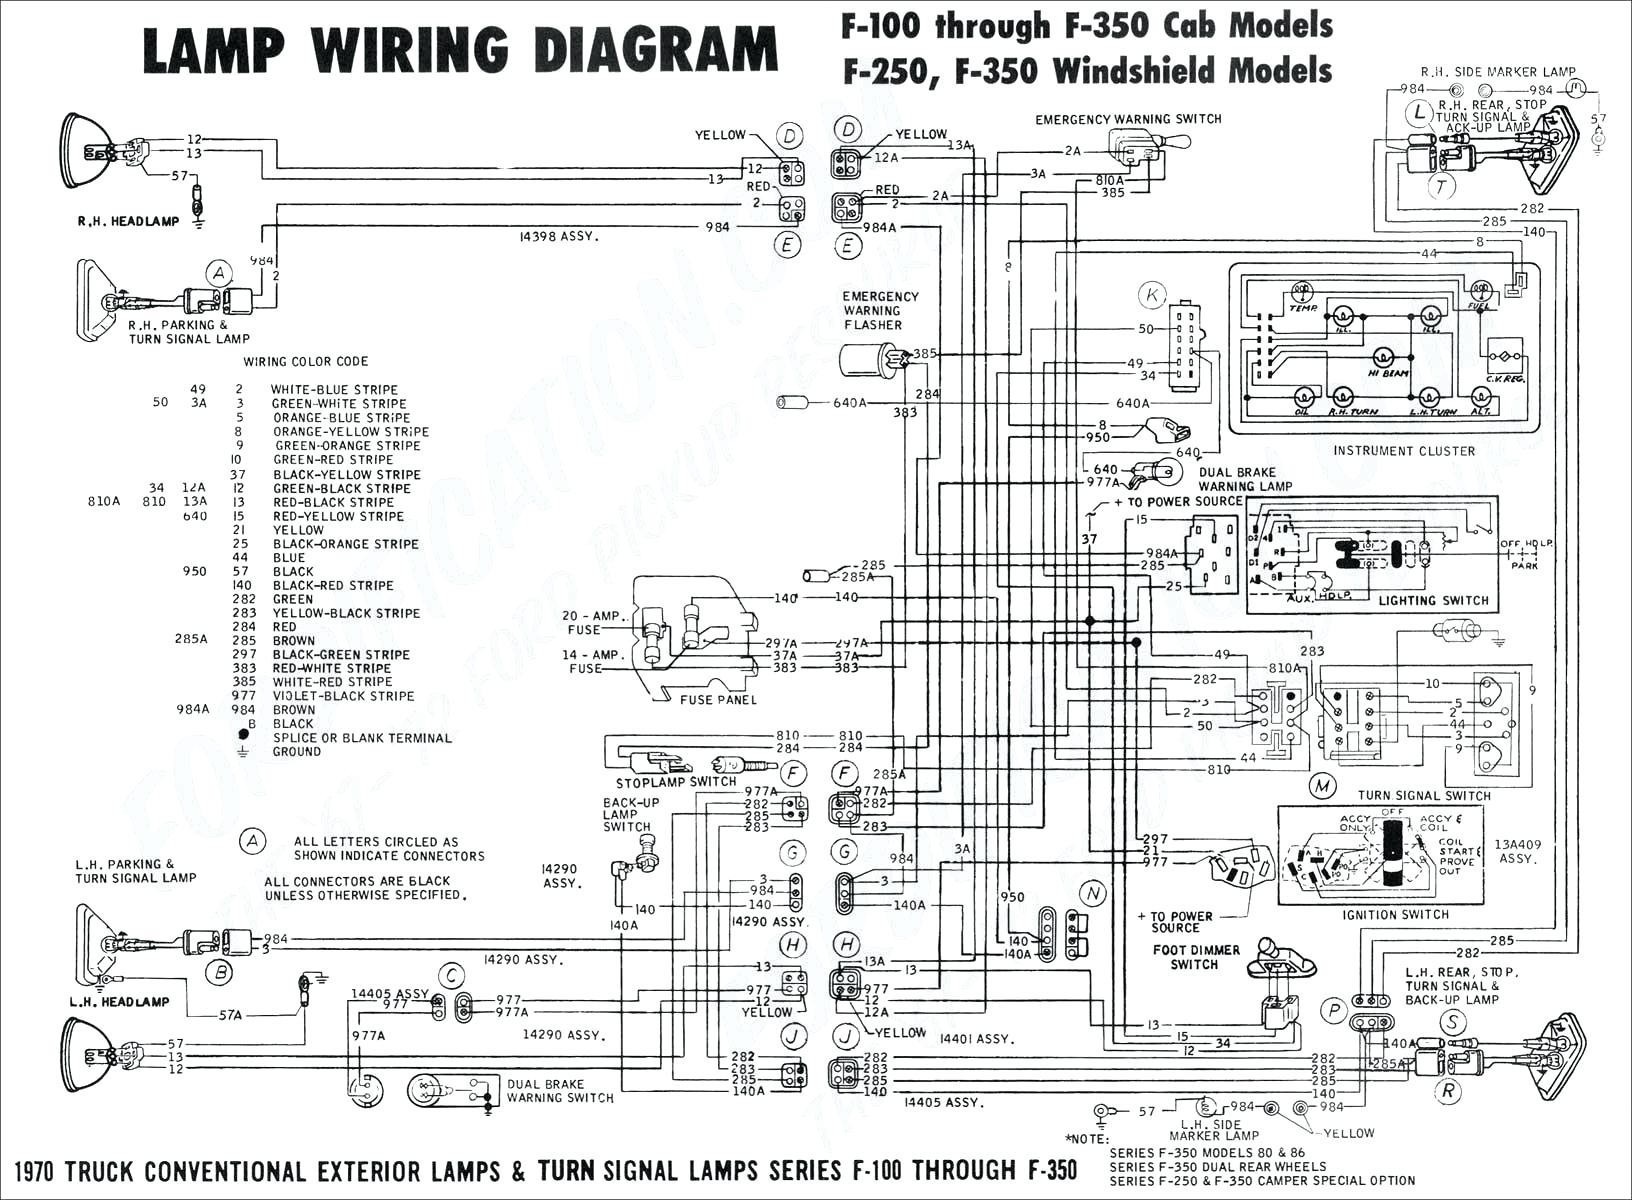 2002 Cadillac Deville Engine Diagram 1981 Goldwing Wiring Diagram Wiring Diagram toolbox Of 2002 Cadillac Deville Engine Diagram